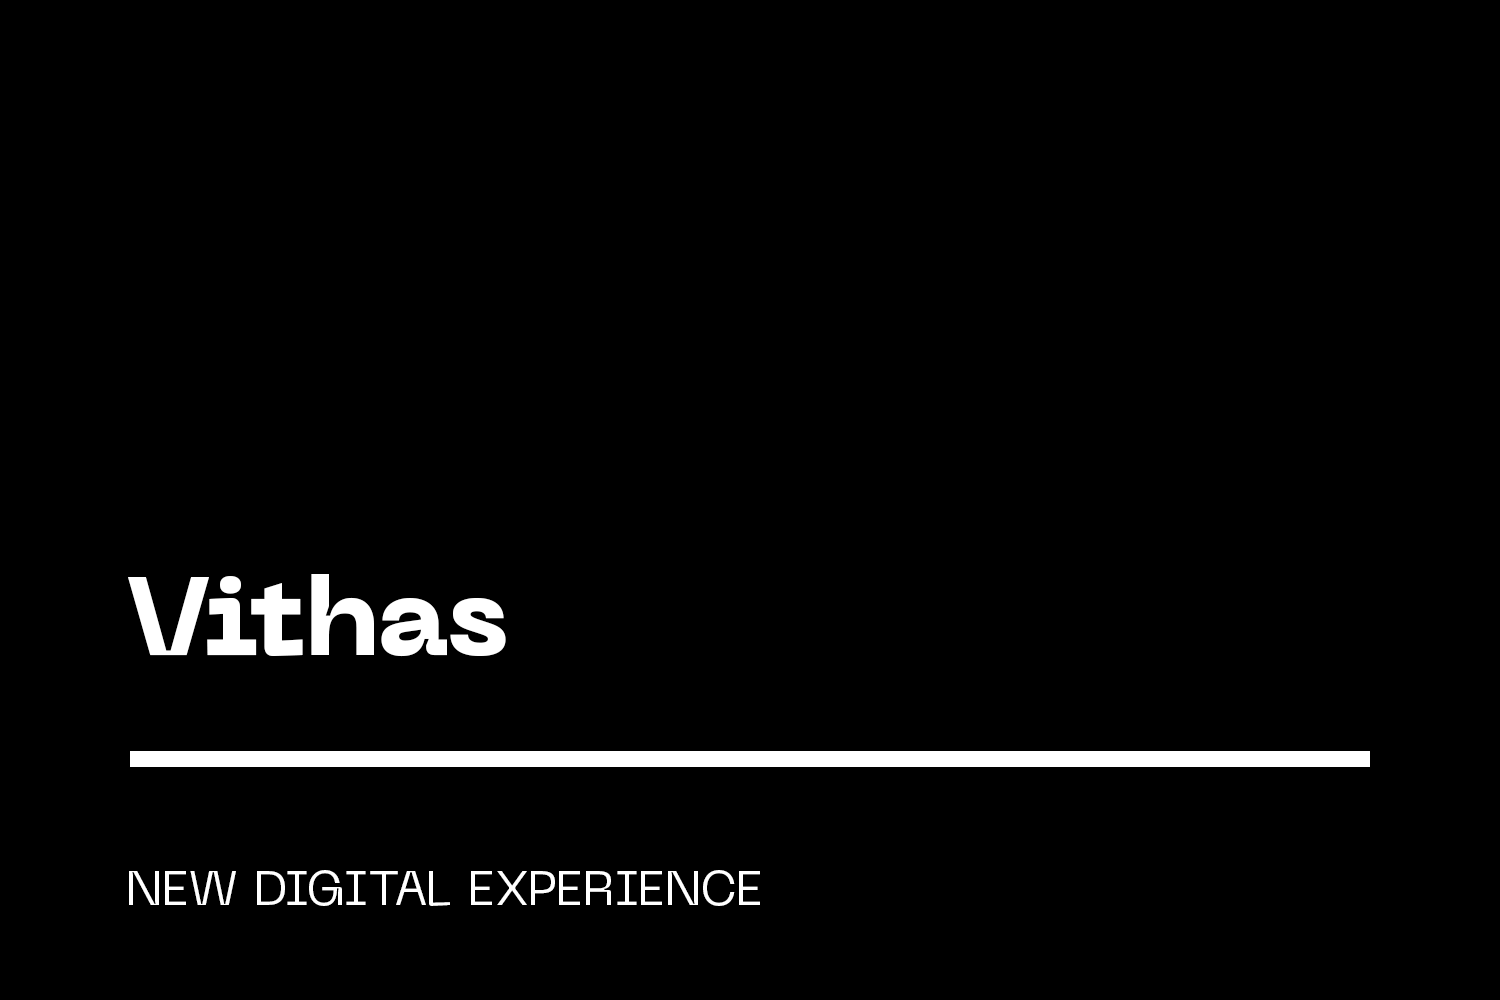 Vithas — New digital experience